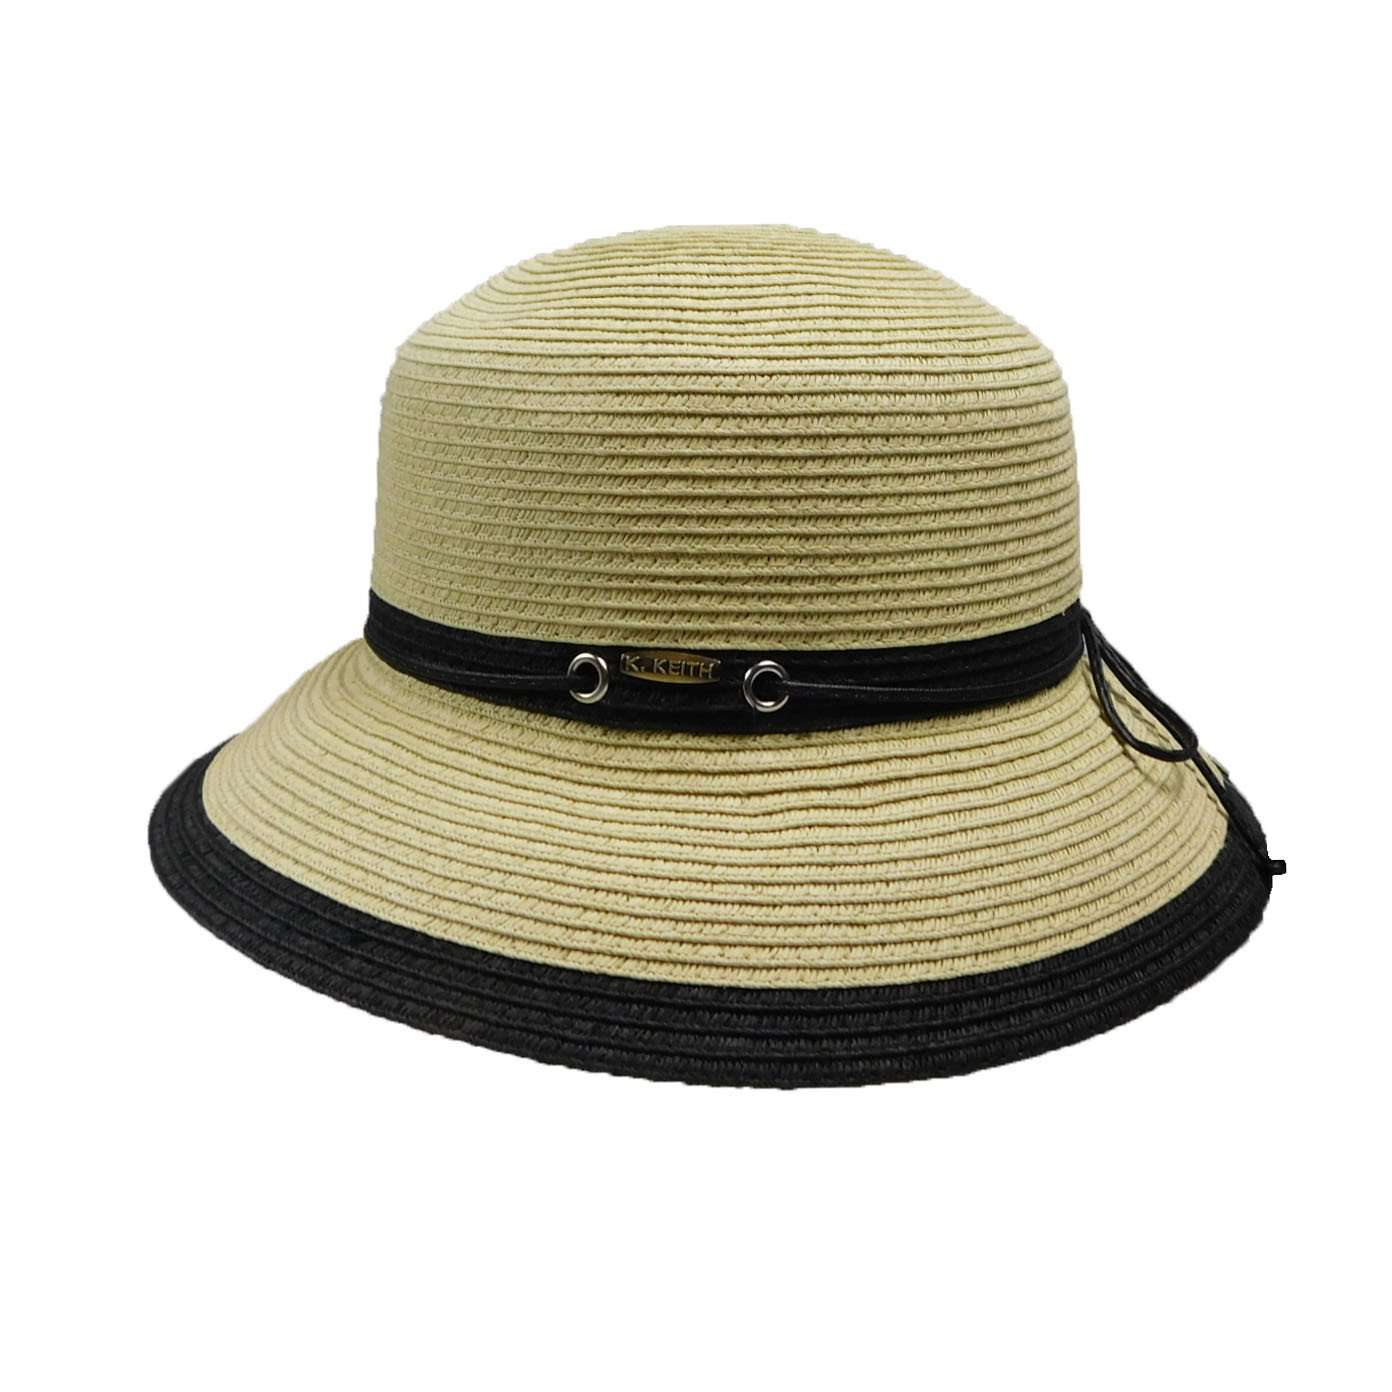 Two Tone Summer Cloche - Karen Keith Cloche Great hats by Karen Keith BT15B Natural  